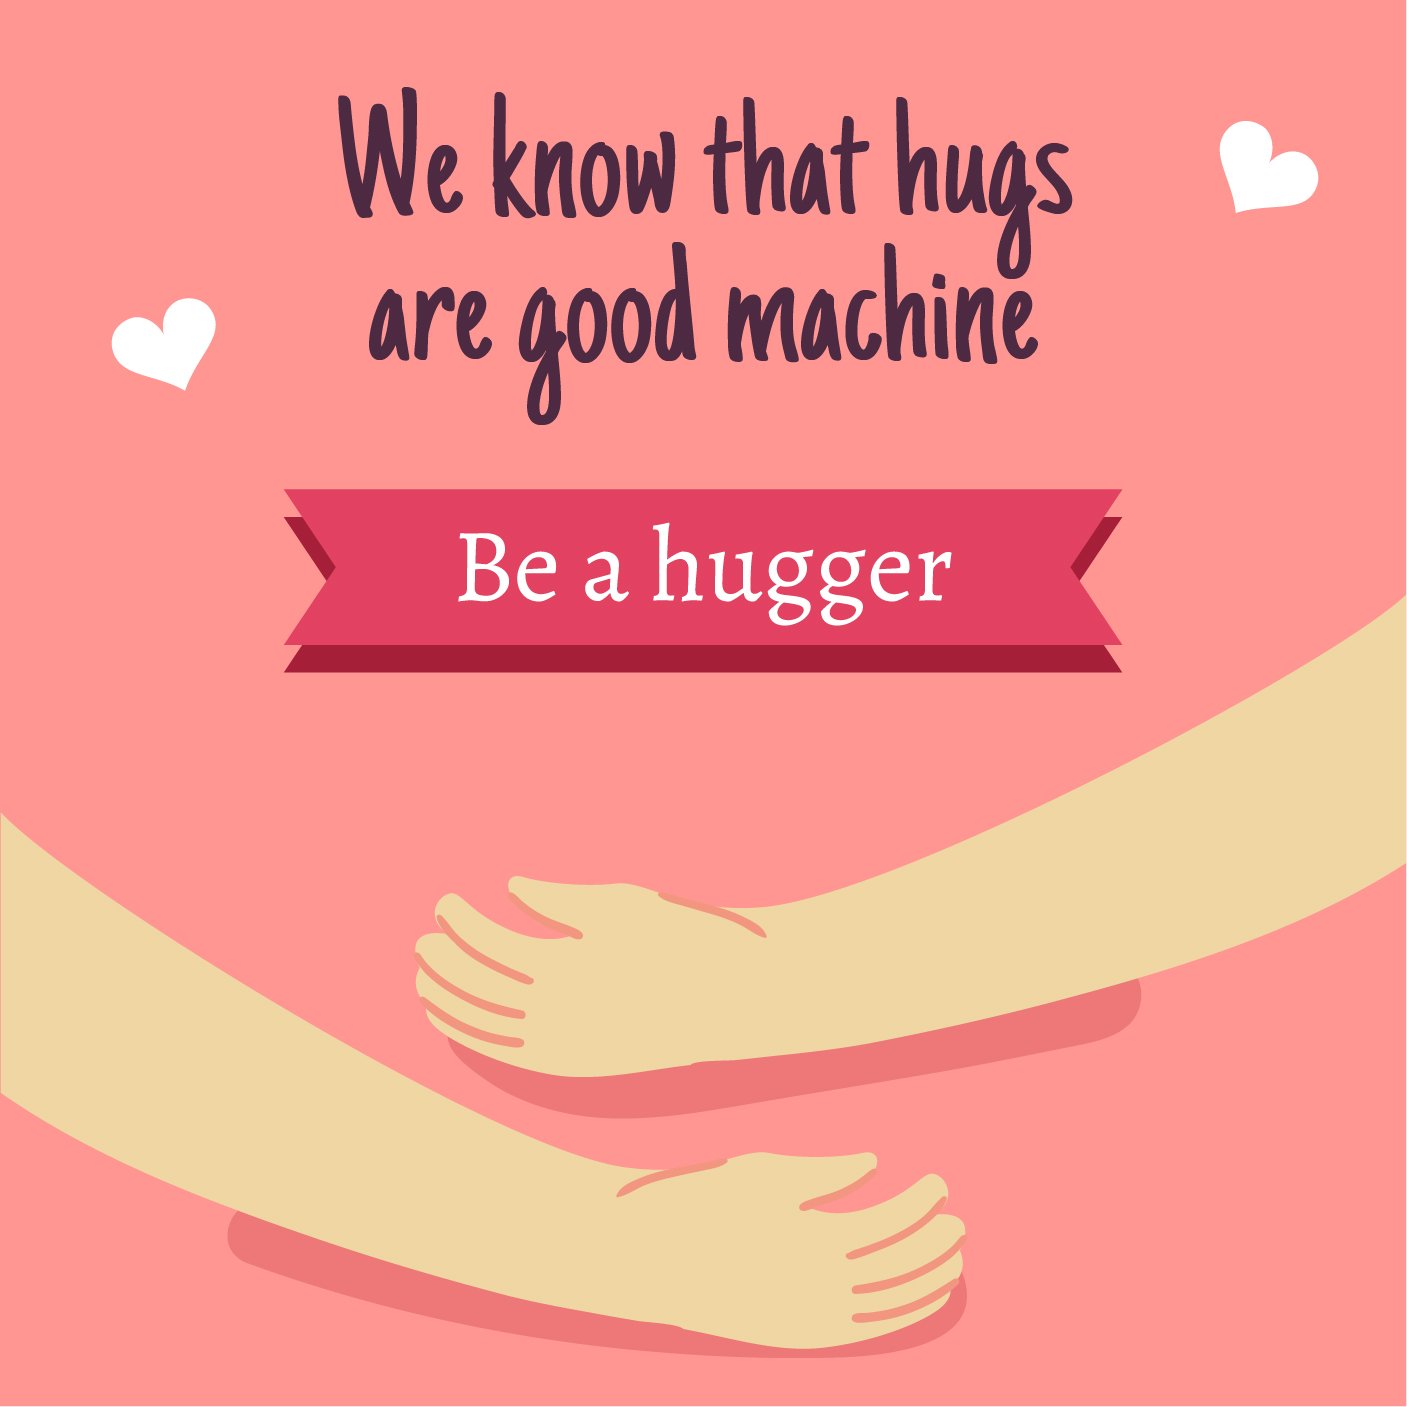 National Hugging Day Greeting Card Vector in Illustrator, PSD, EPS, SVG, JPG, PNG